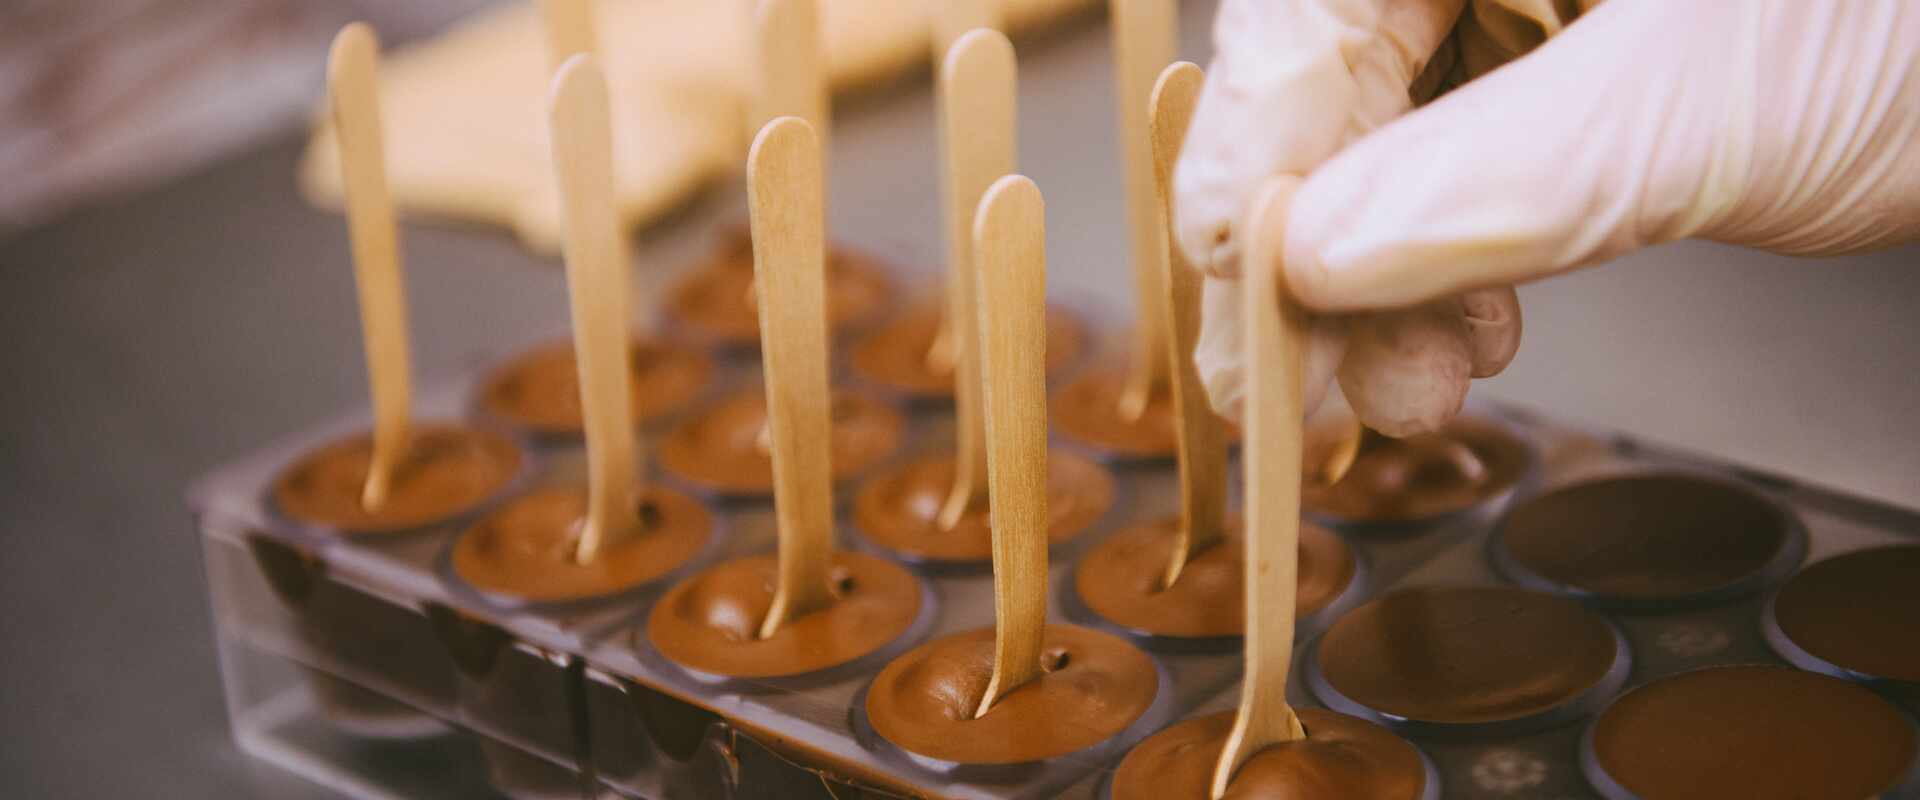 gabriel chocolates handmade margaret river wa australia